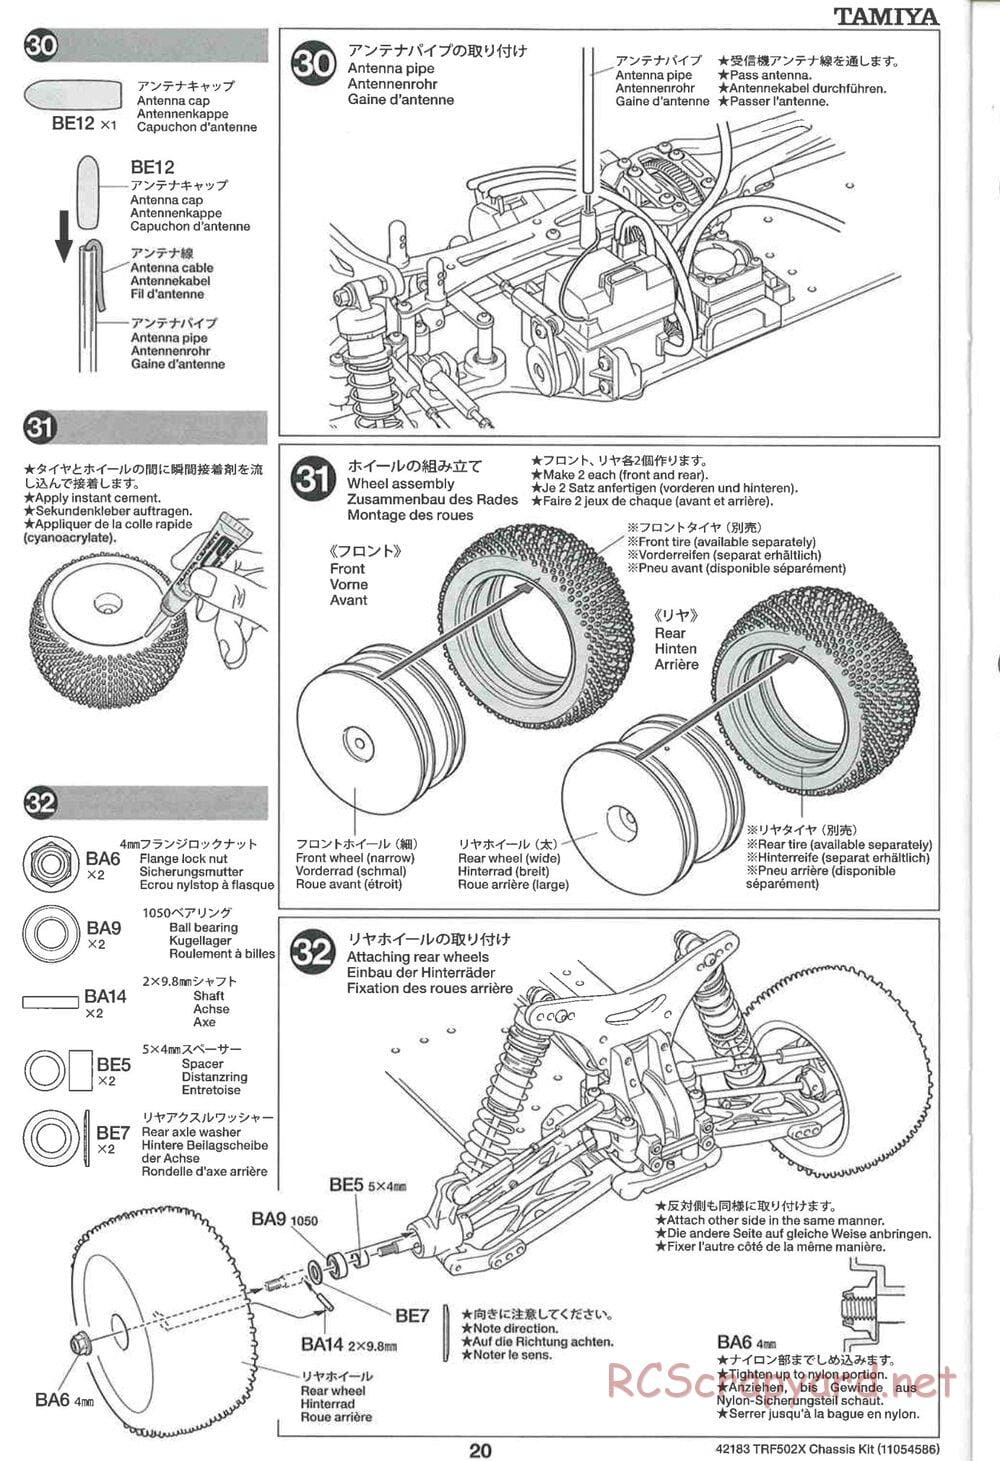 Tamiya - TRF502X Chassis - Manual - Page 20